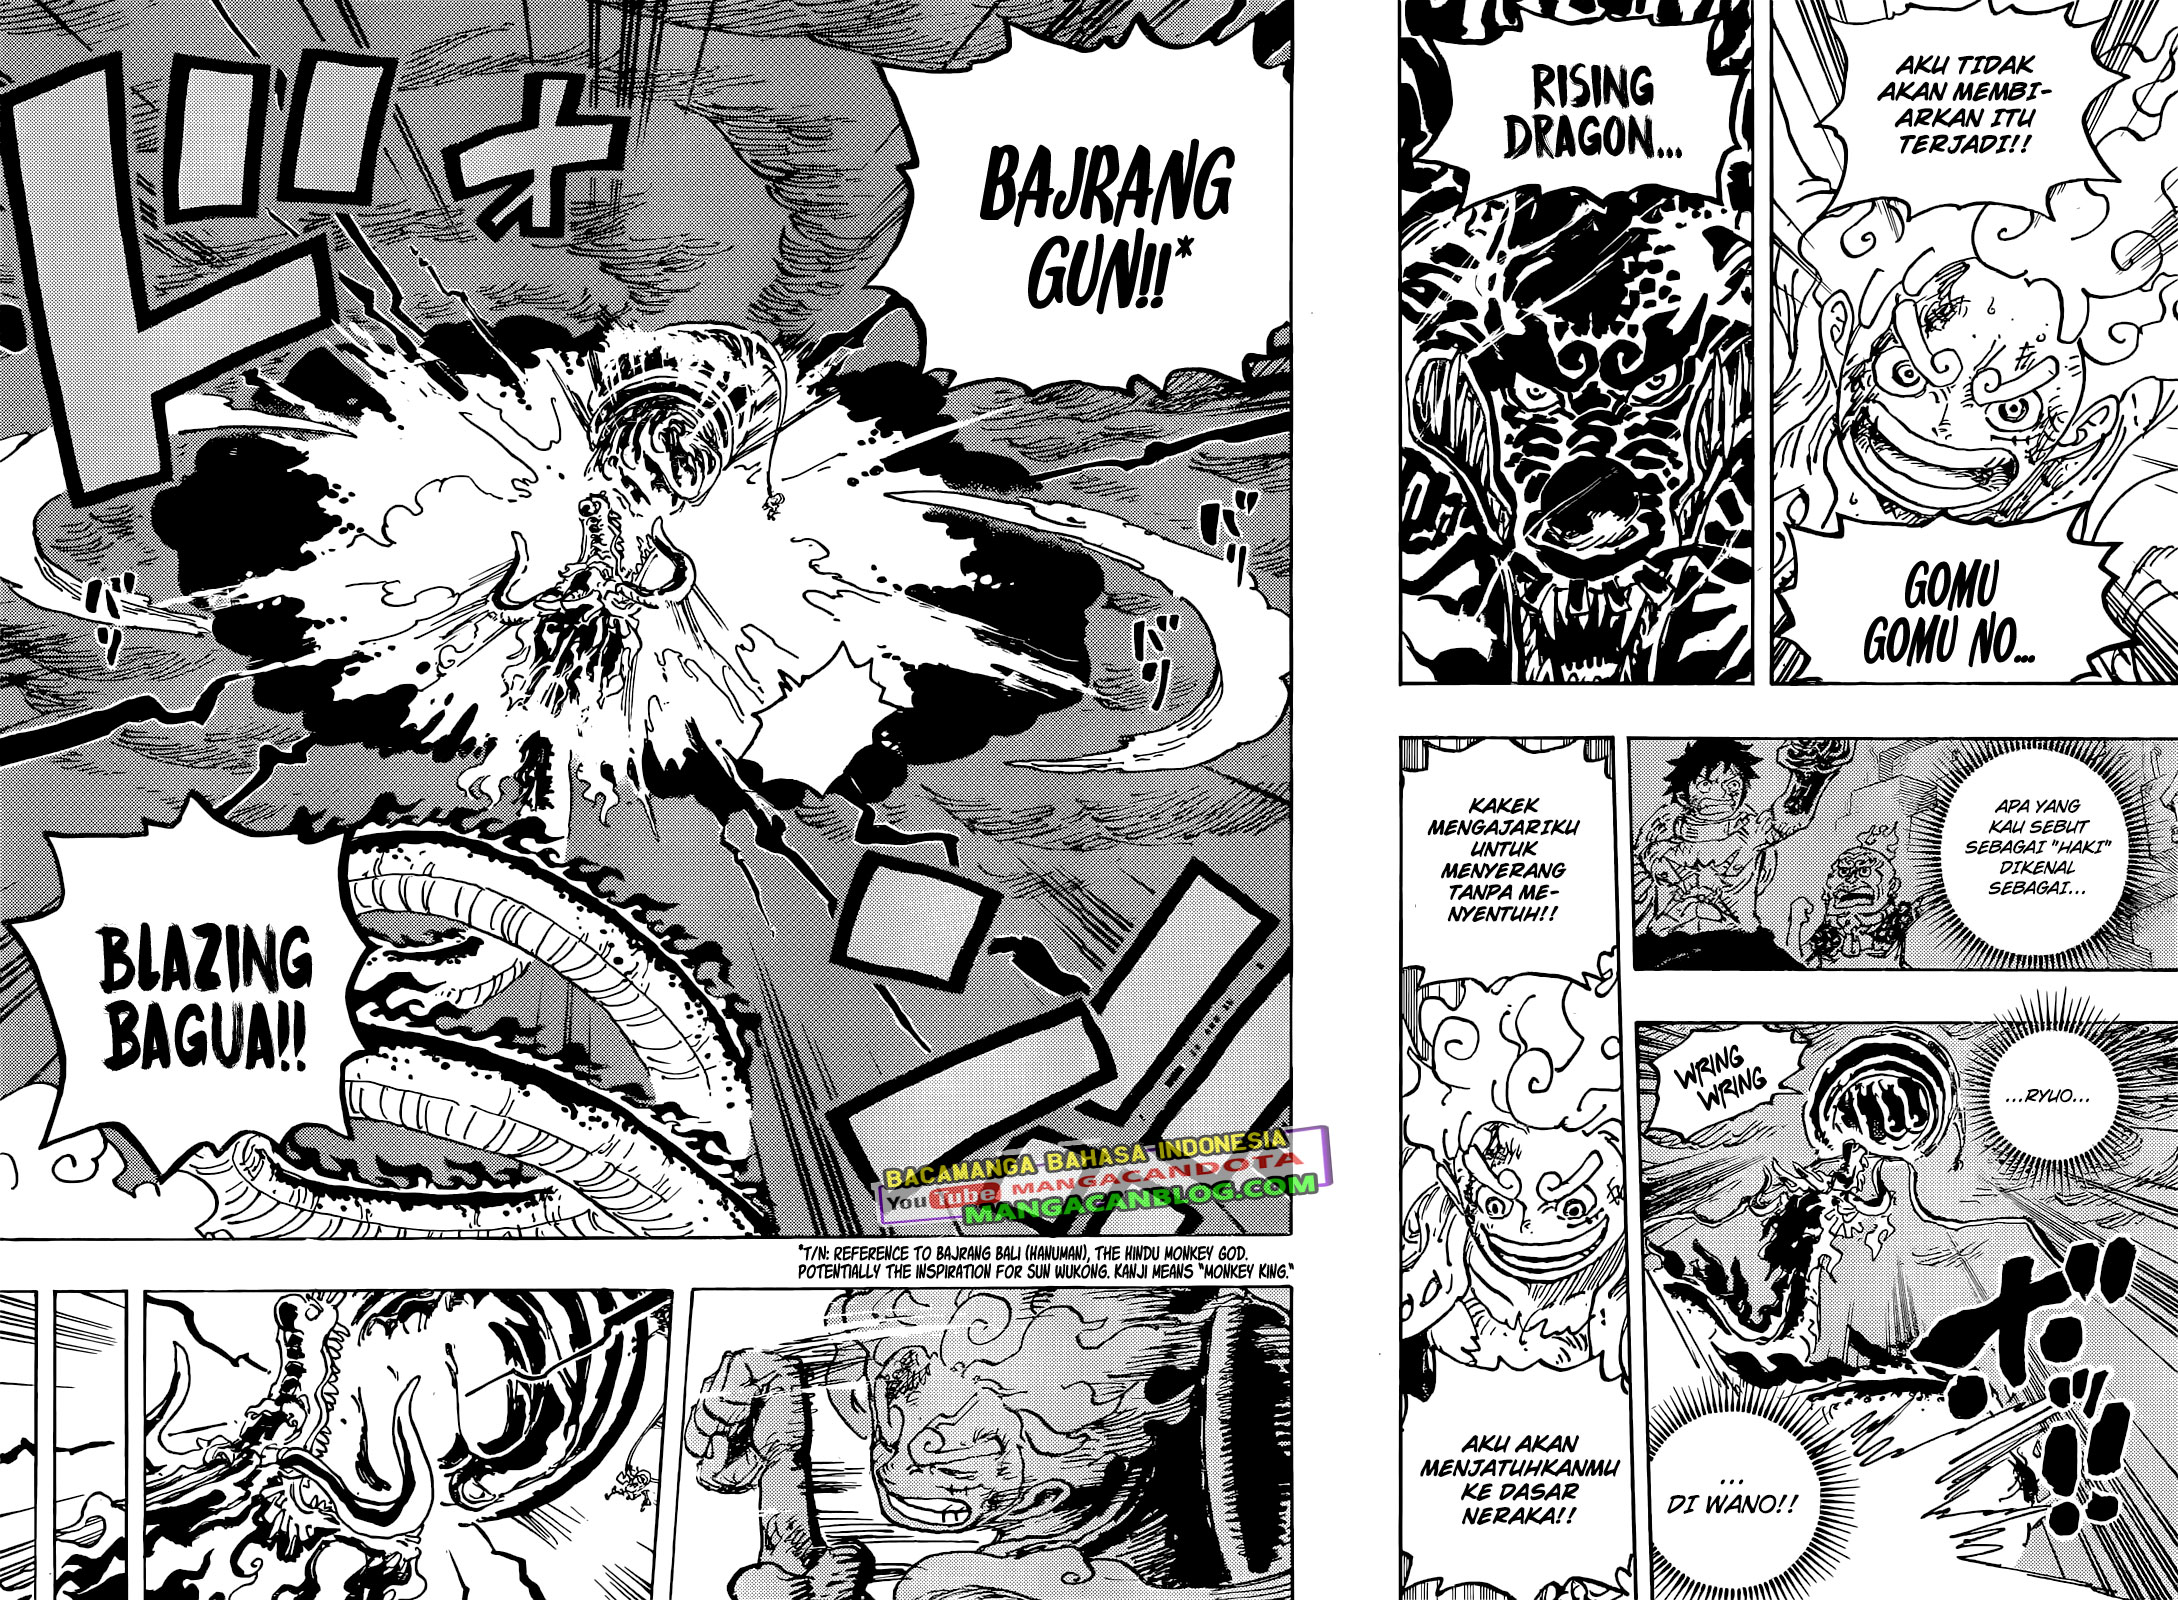 Manga One Piece Chapter 1048 Bahasa Indonesia